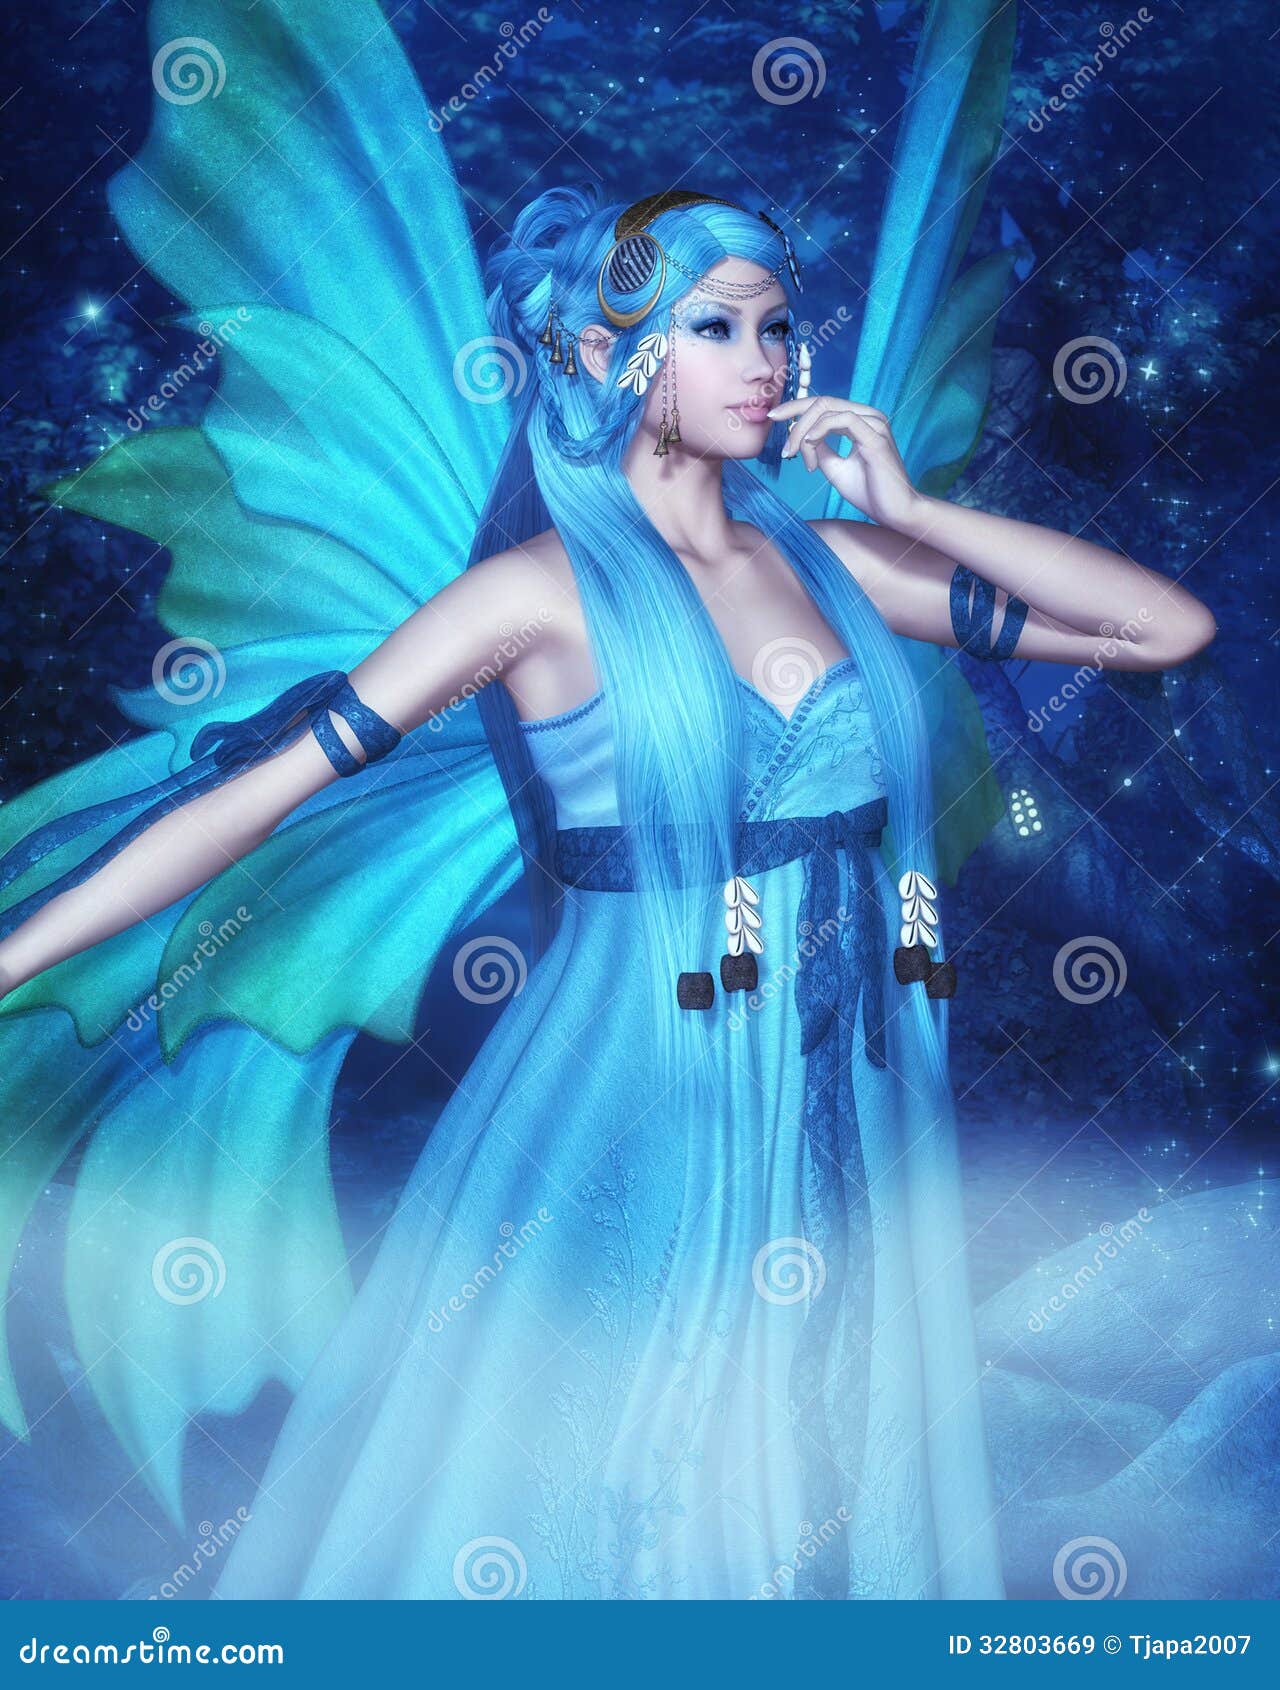 Blue haired fairy